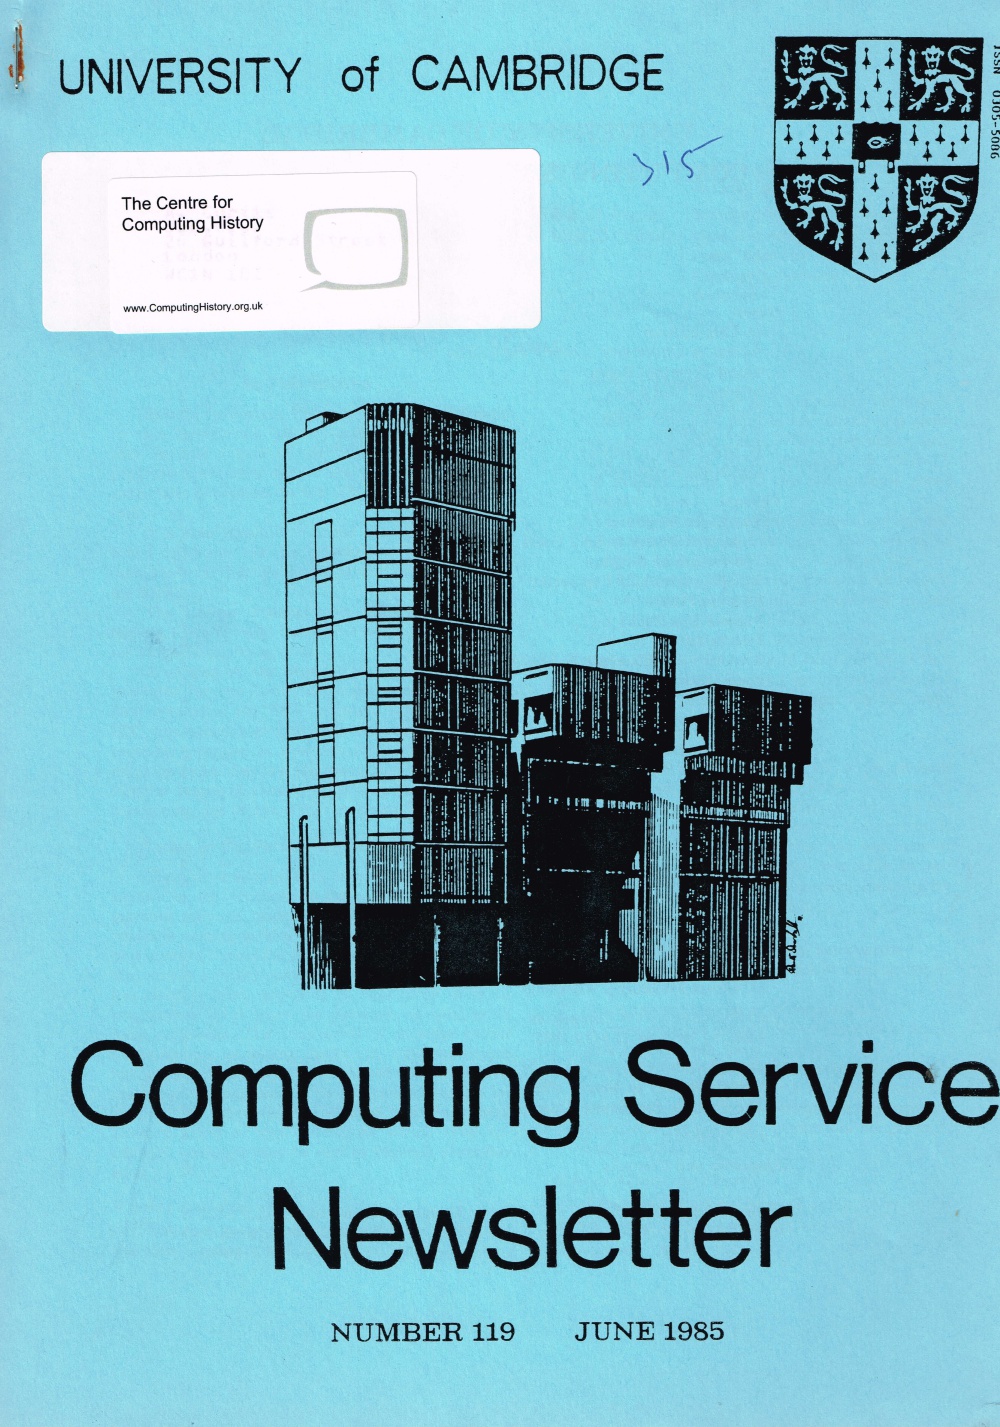 Article: University of Cambridge Computing Service June 1985 Newsletter 119